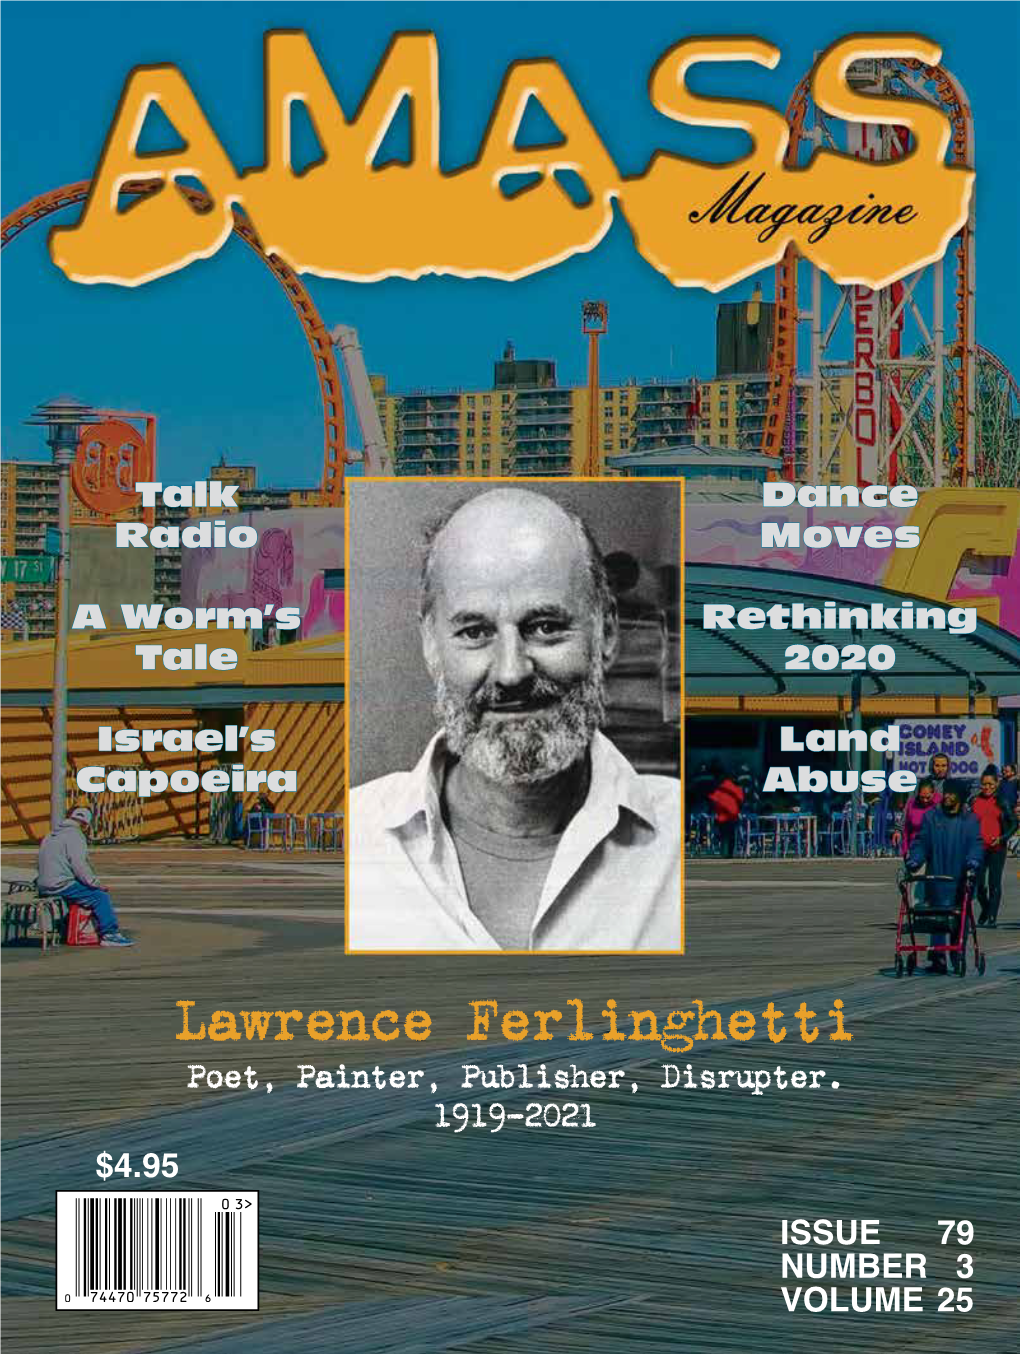 Lawrence Ferlinghetti Poet, Painter, Publisher, Disrupter